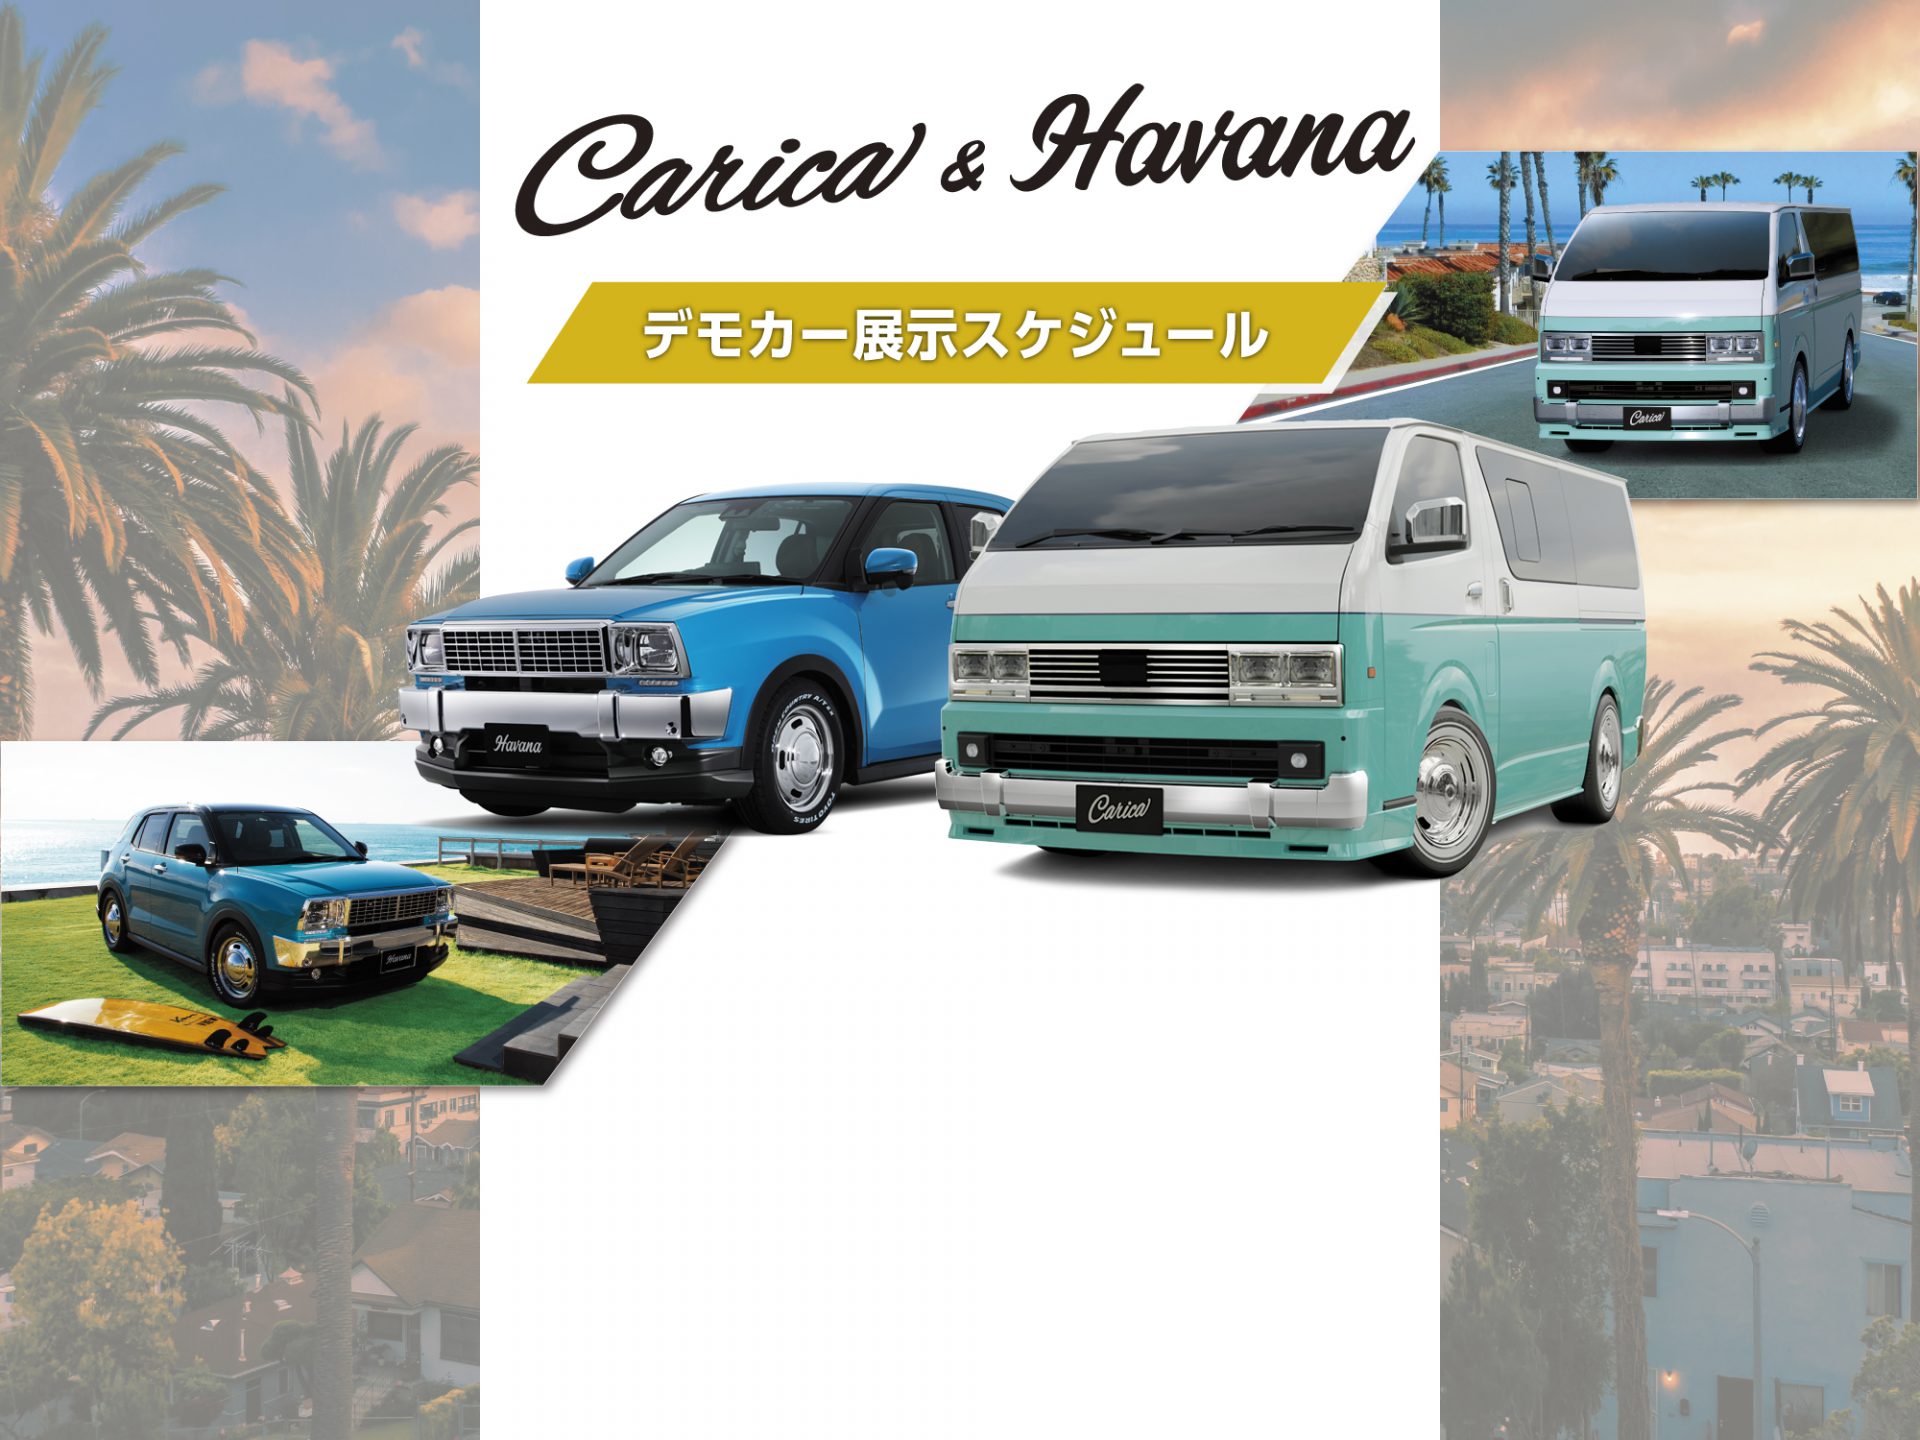 Carica&Havana<br>展示スケジュール